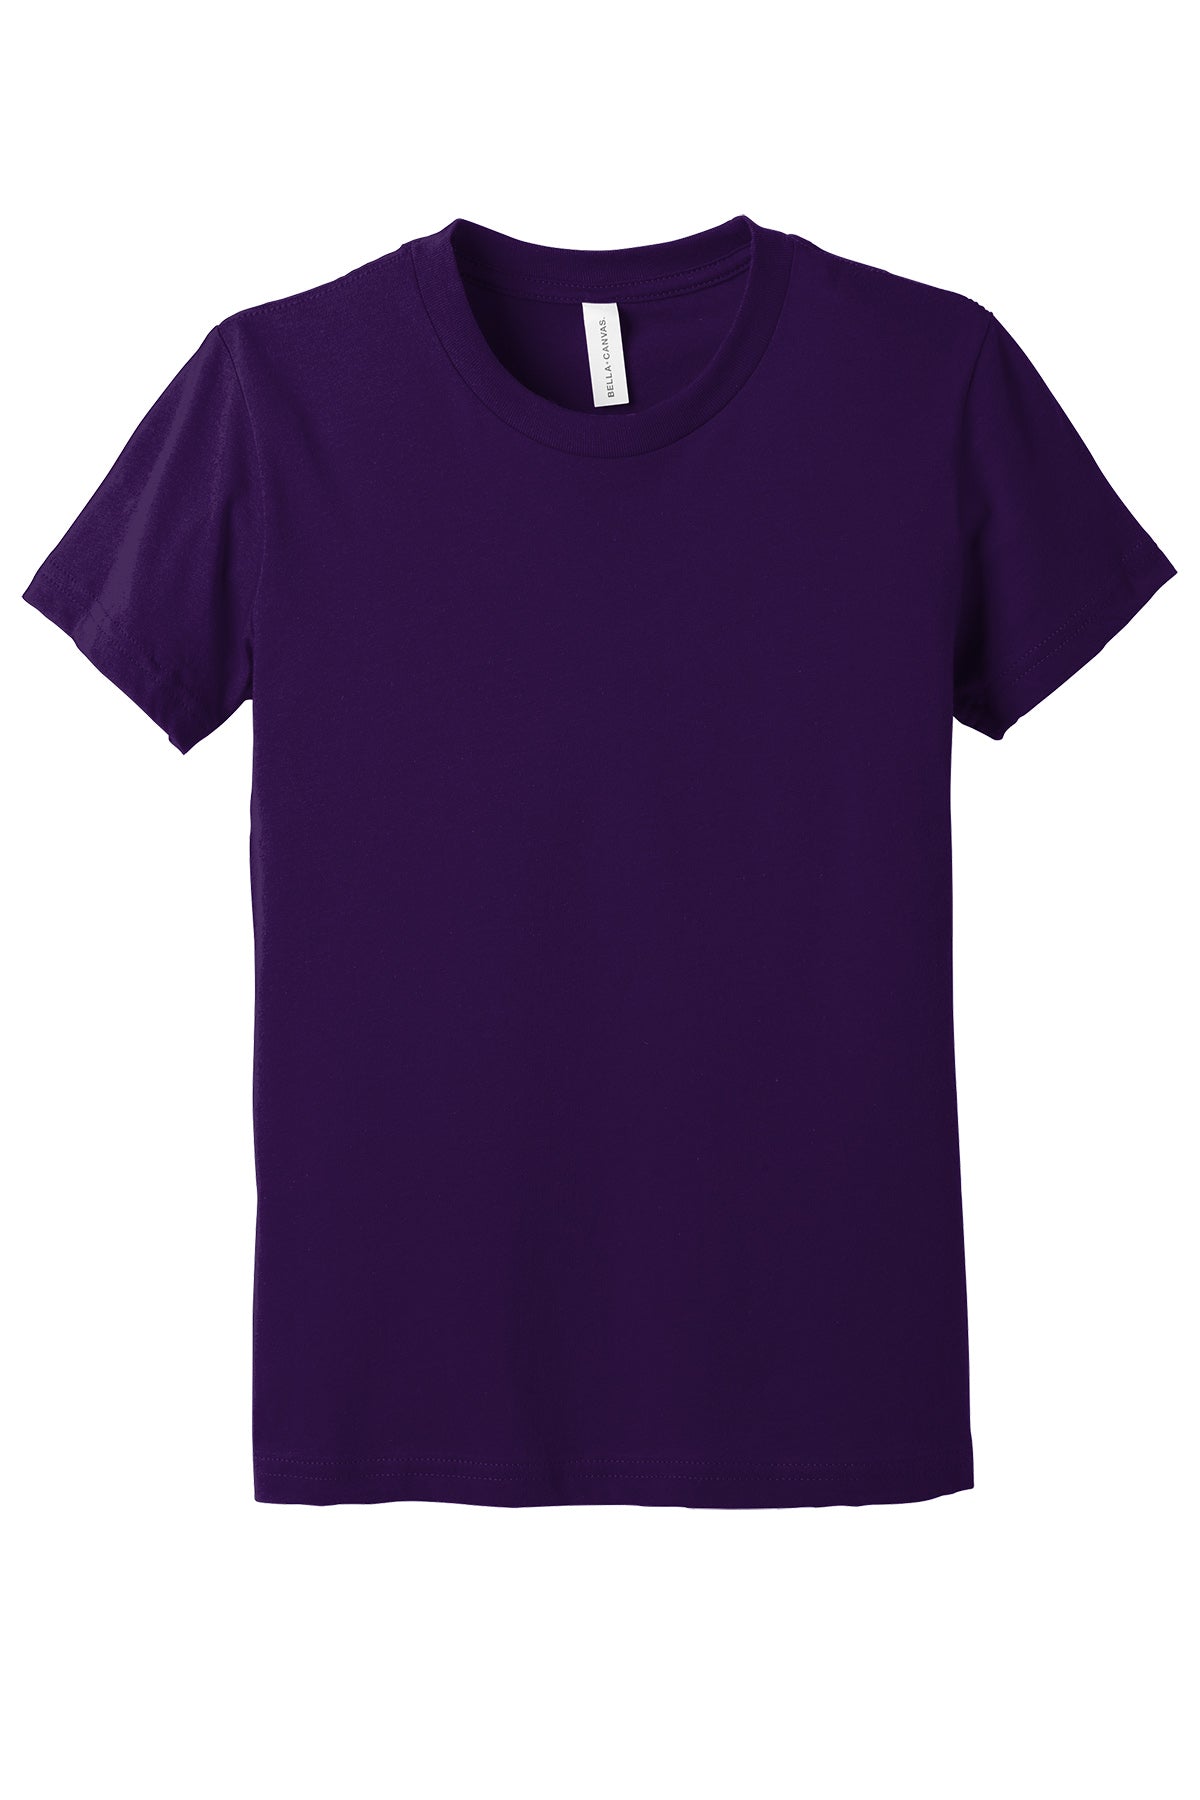 Bella+Canvas Bc3001Cvc Adult T-Shirt Ad Small / Heather Team Purple